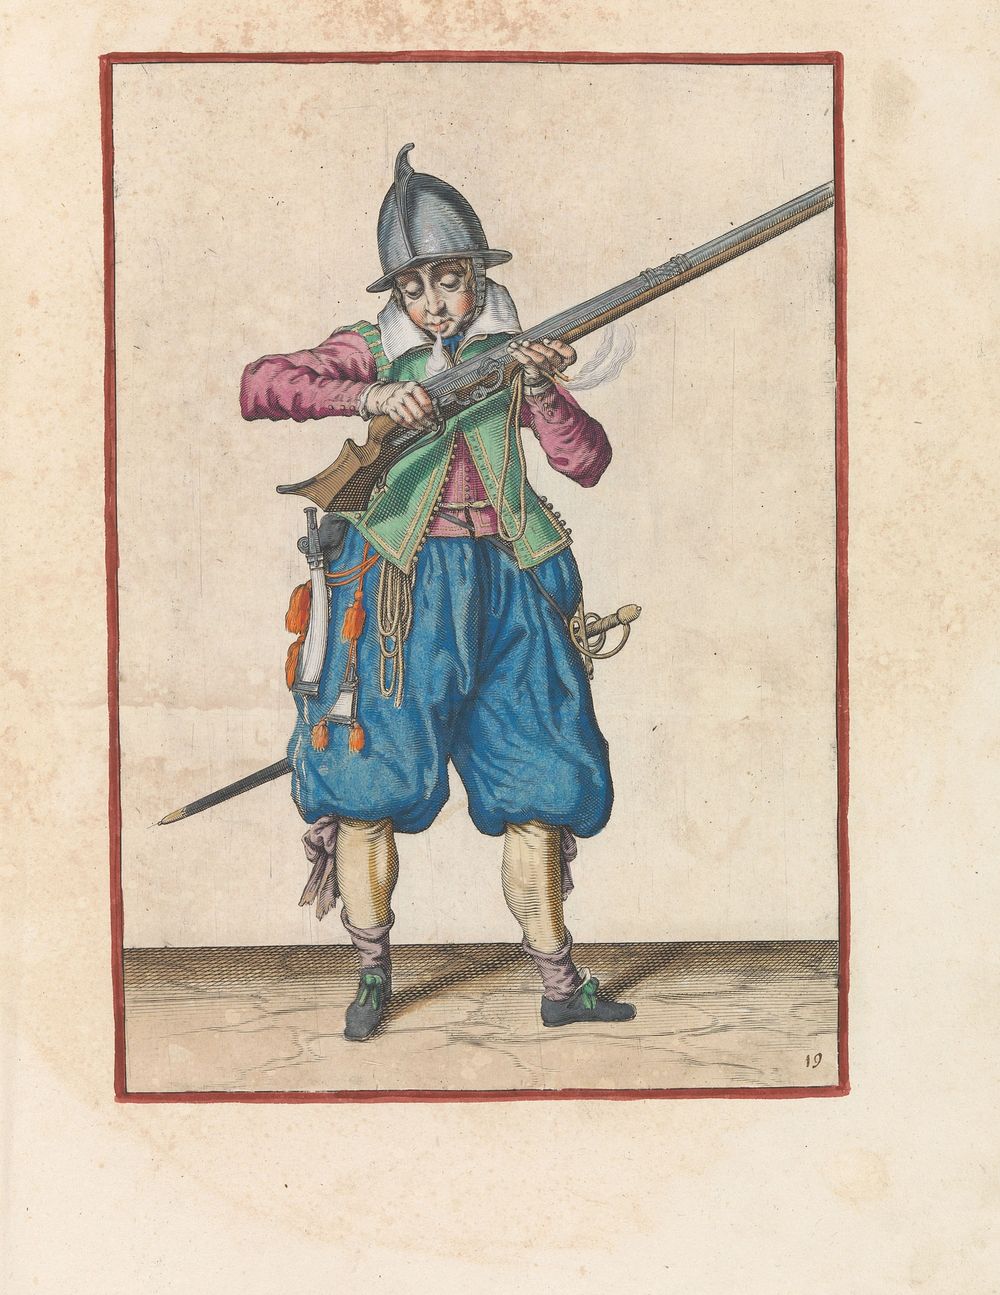 Soldaat die kruit van zijn roer blaast (c. 1597 - 1607) by Jacques de Gheyn II and Jacques de Gheyn II